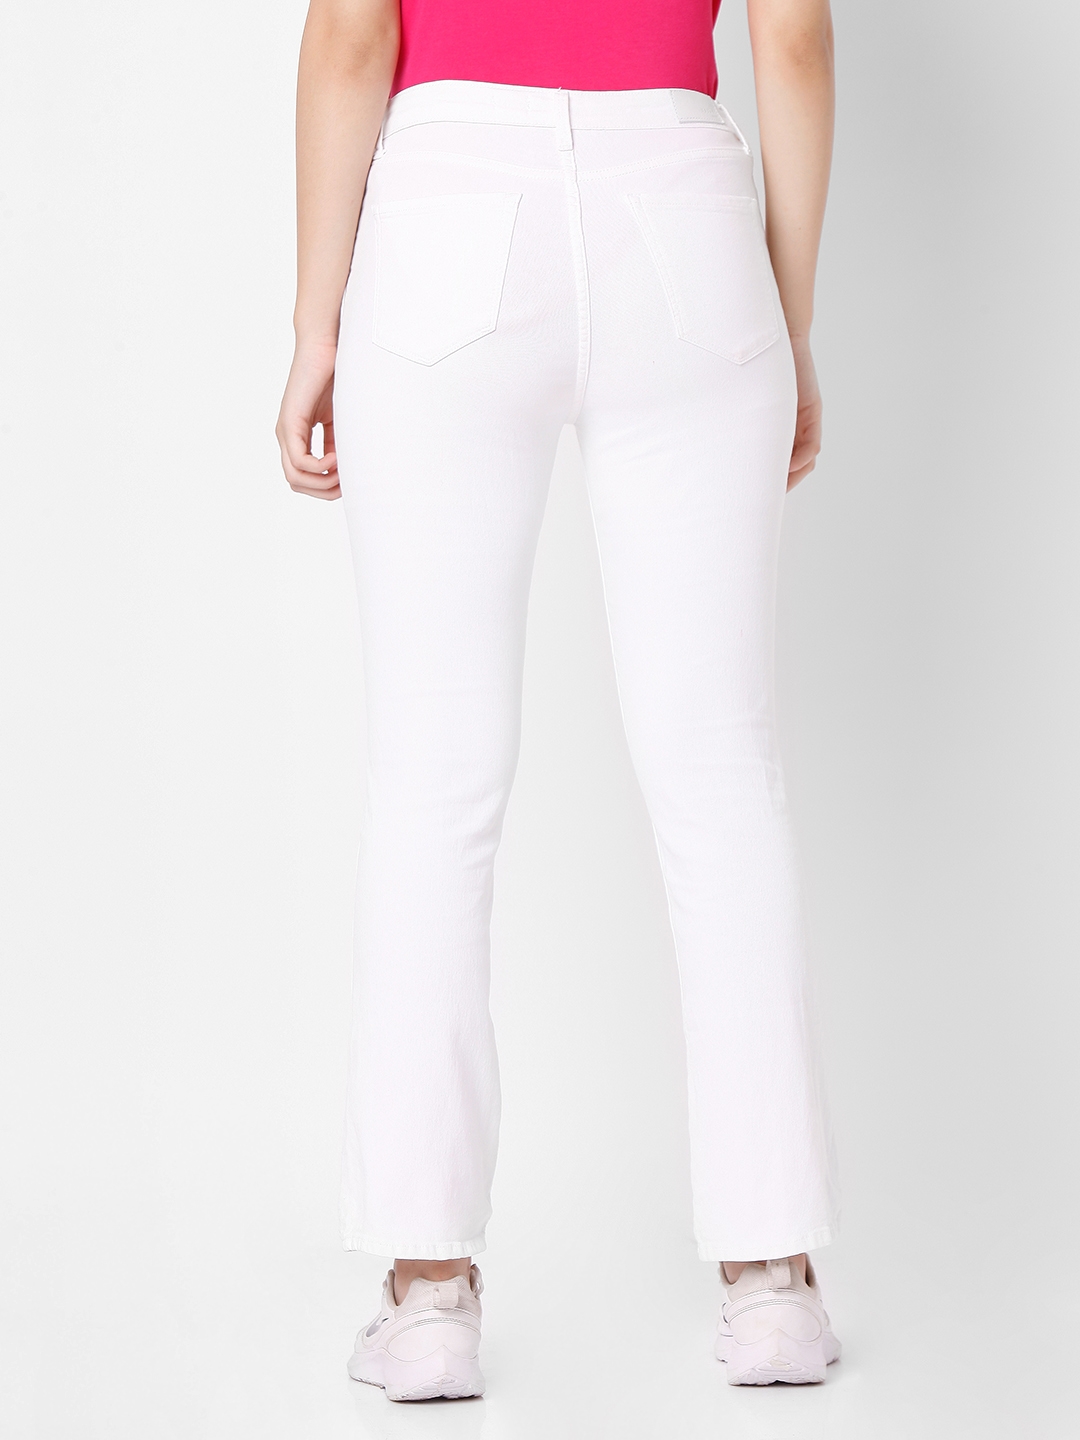 spykar | Women's White Cotton Solid Slim Jeans 3